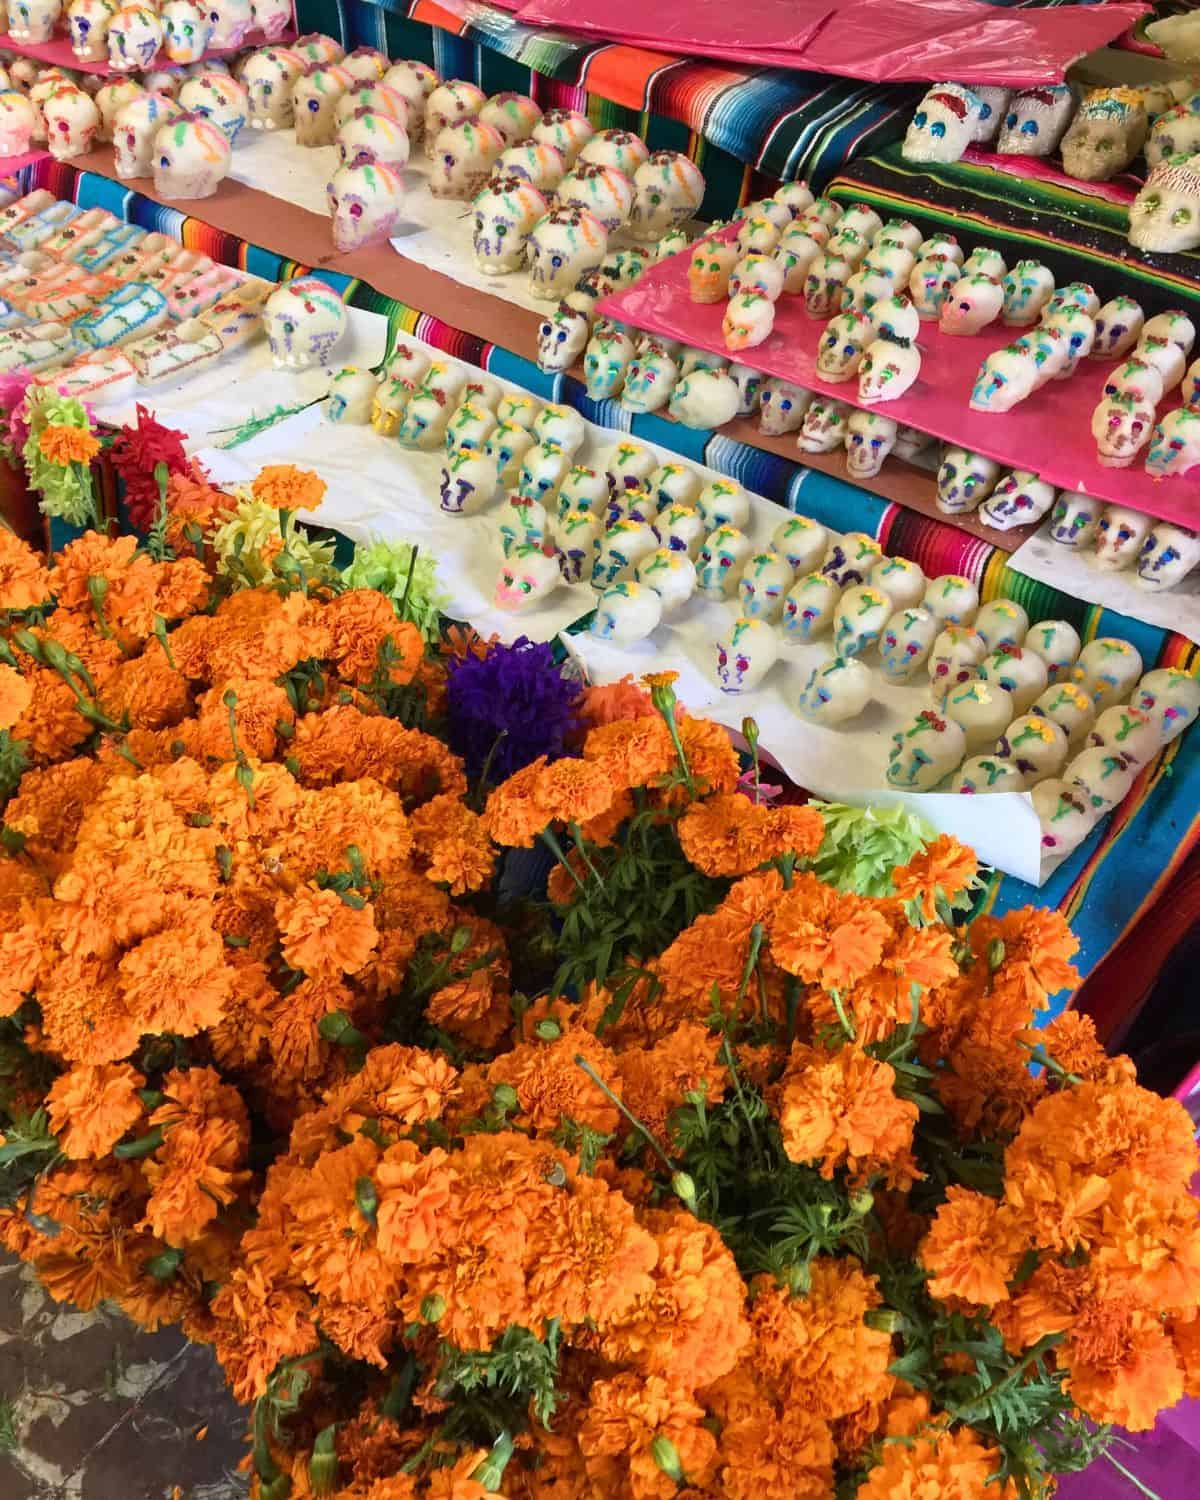 Marigolds and sugar skulls sold at a Mexican market.